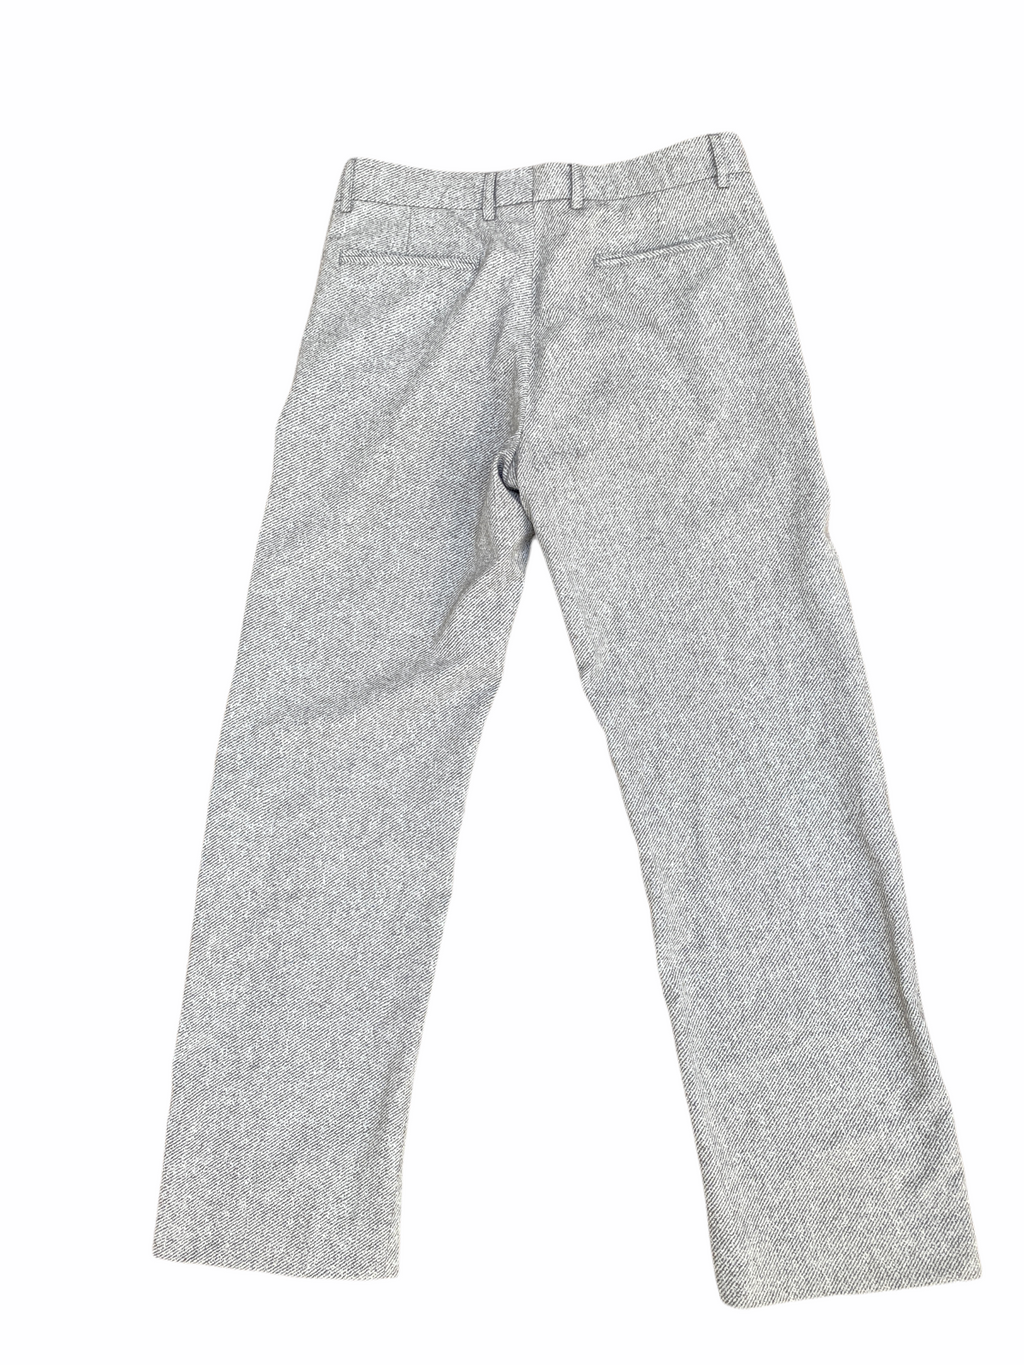 FW 2008 Grey Wool Pants